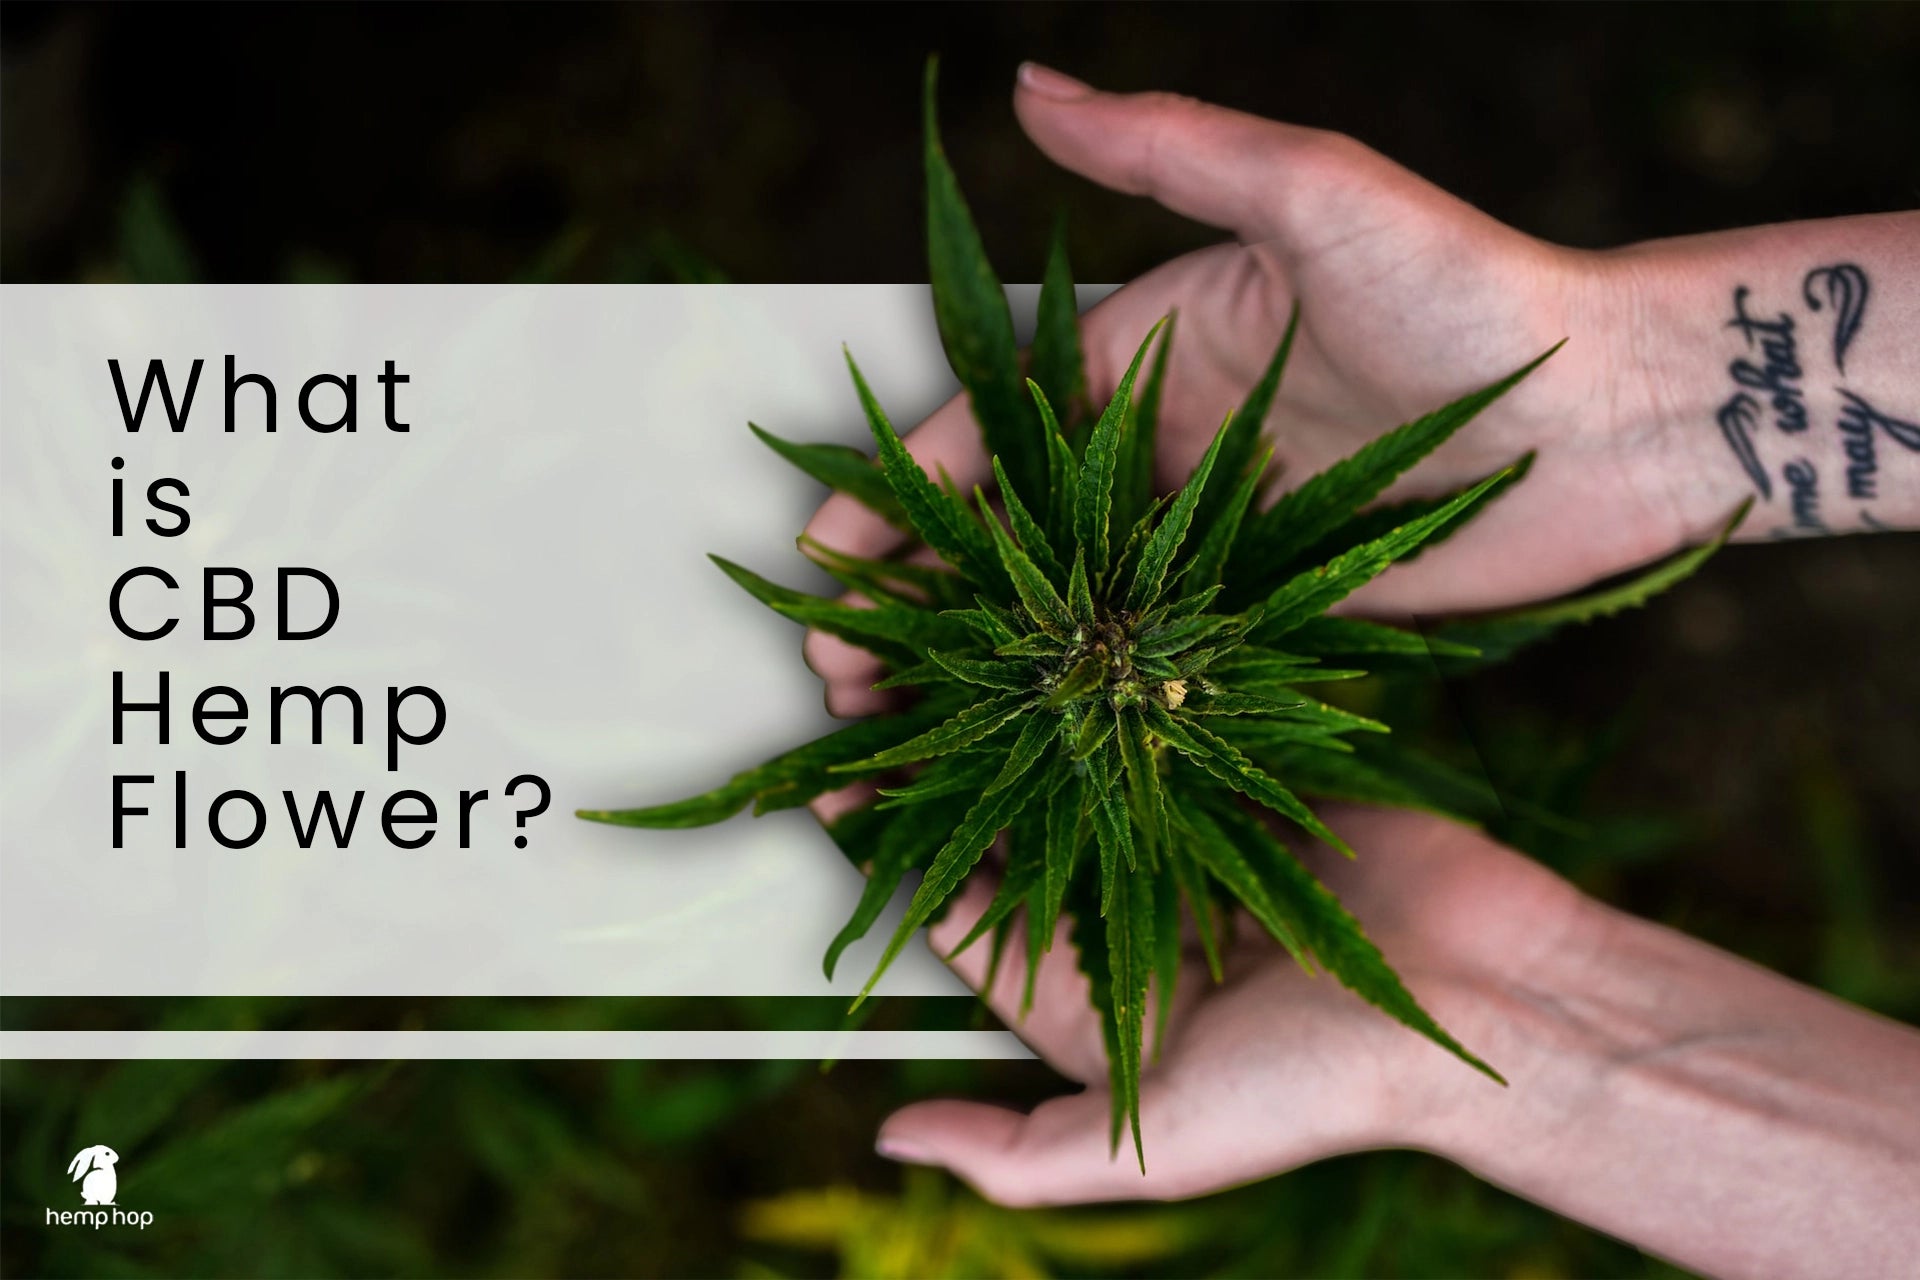 What is CBD Hemp Flower?